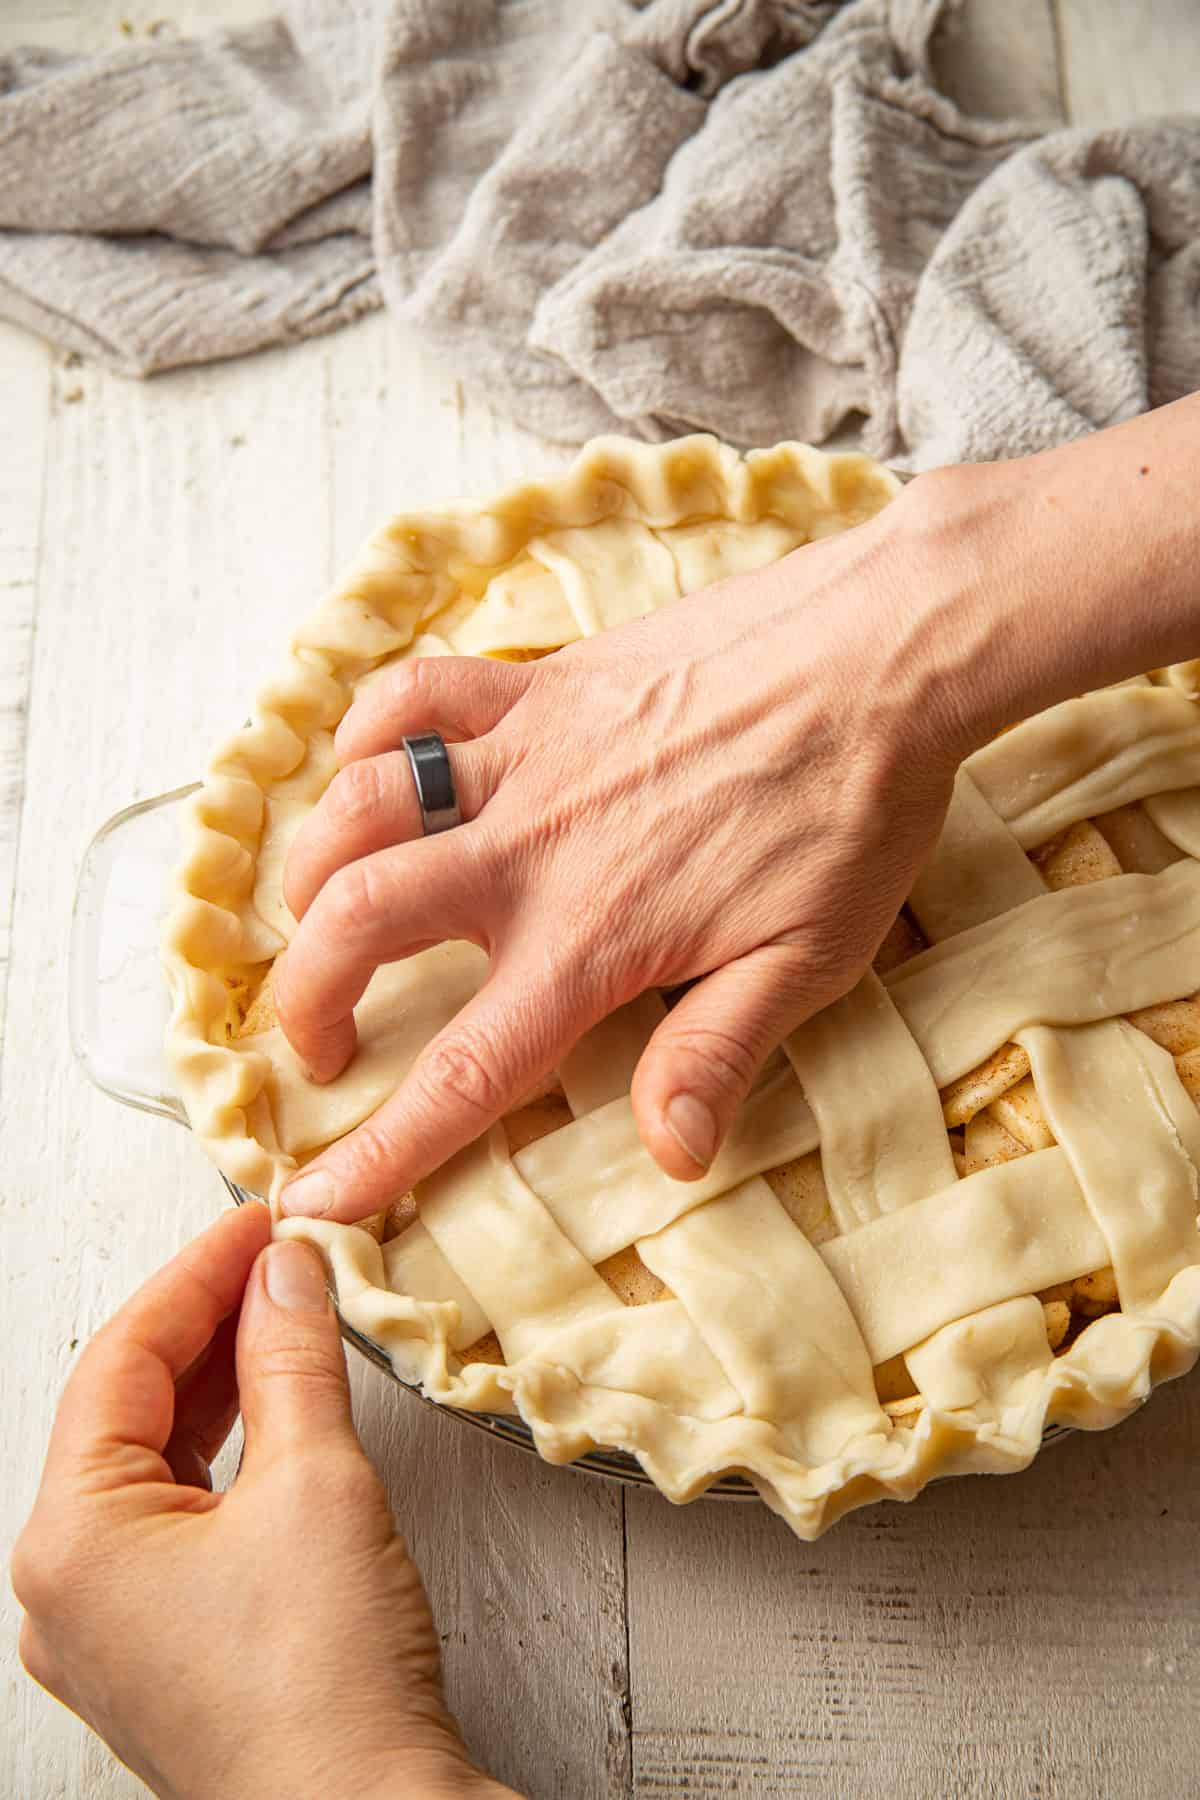 Hands crimping a pie crust.